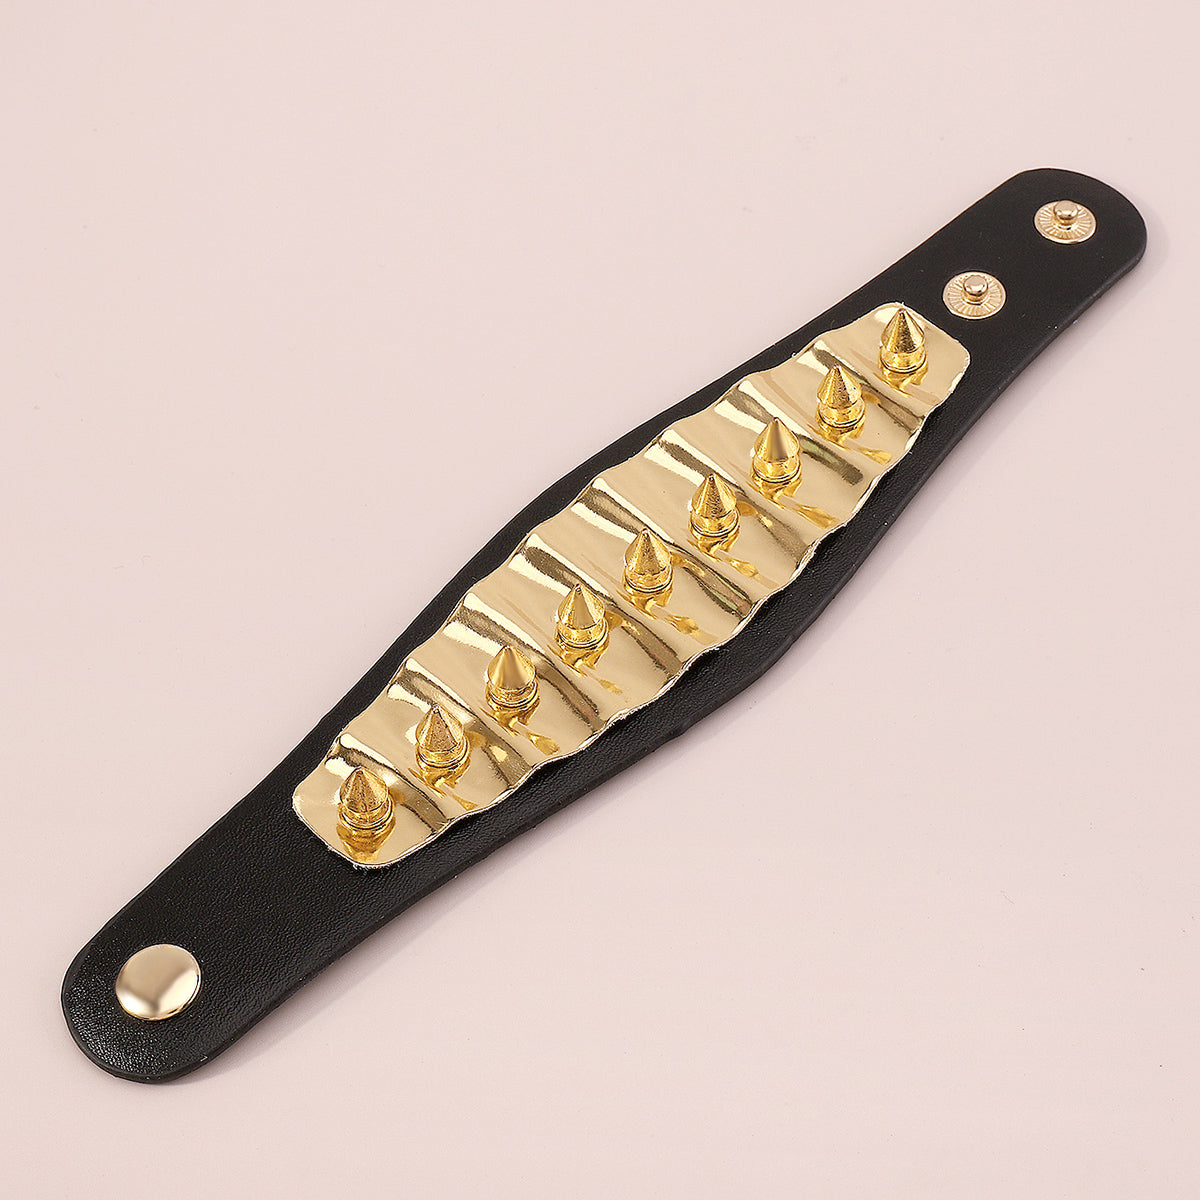 Gold Rivet Wide Cuff Leather Bracelet medyjewelry